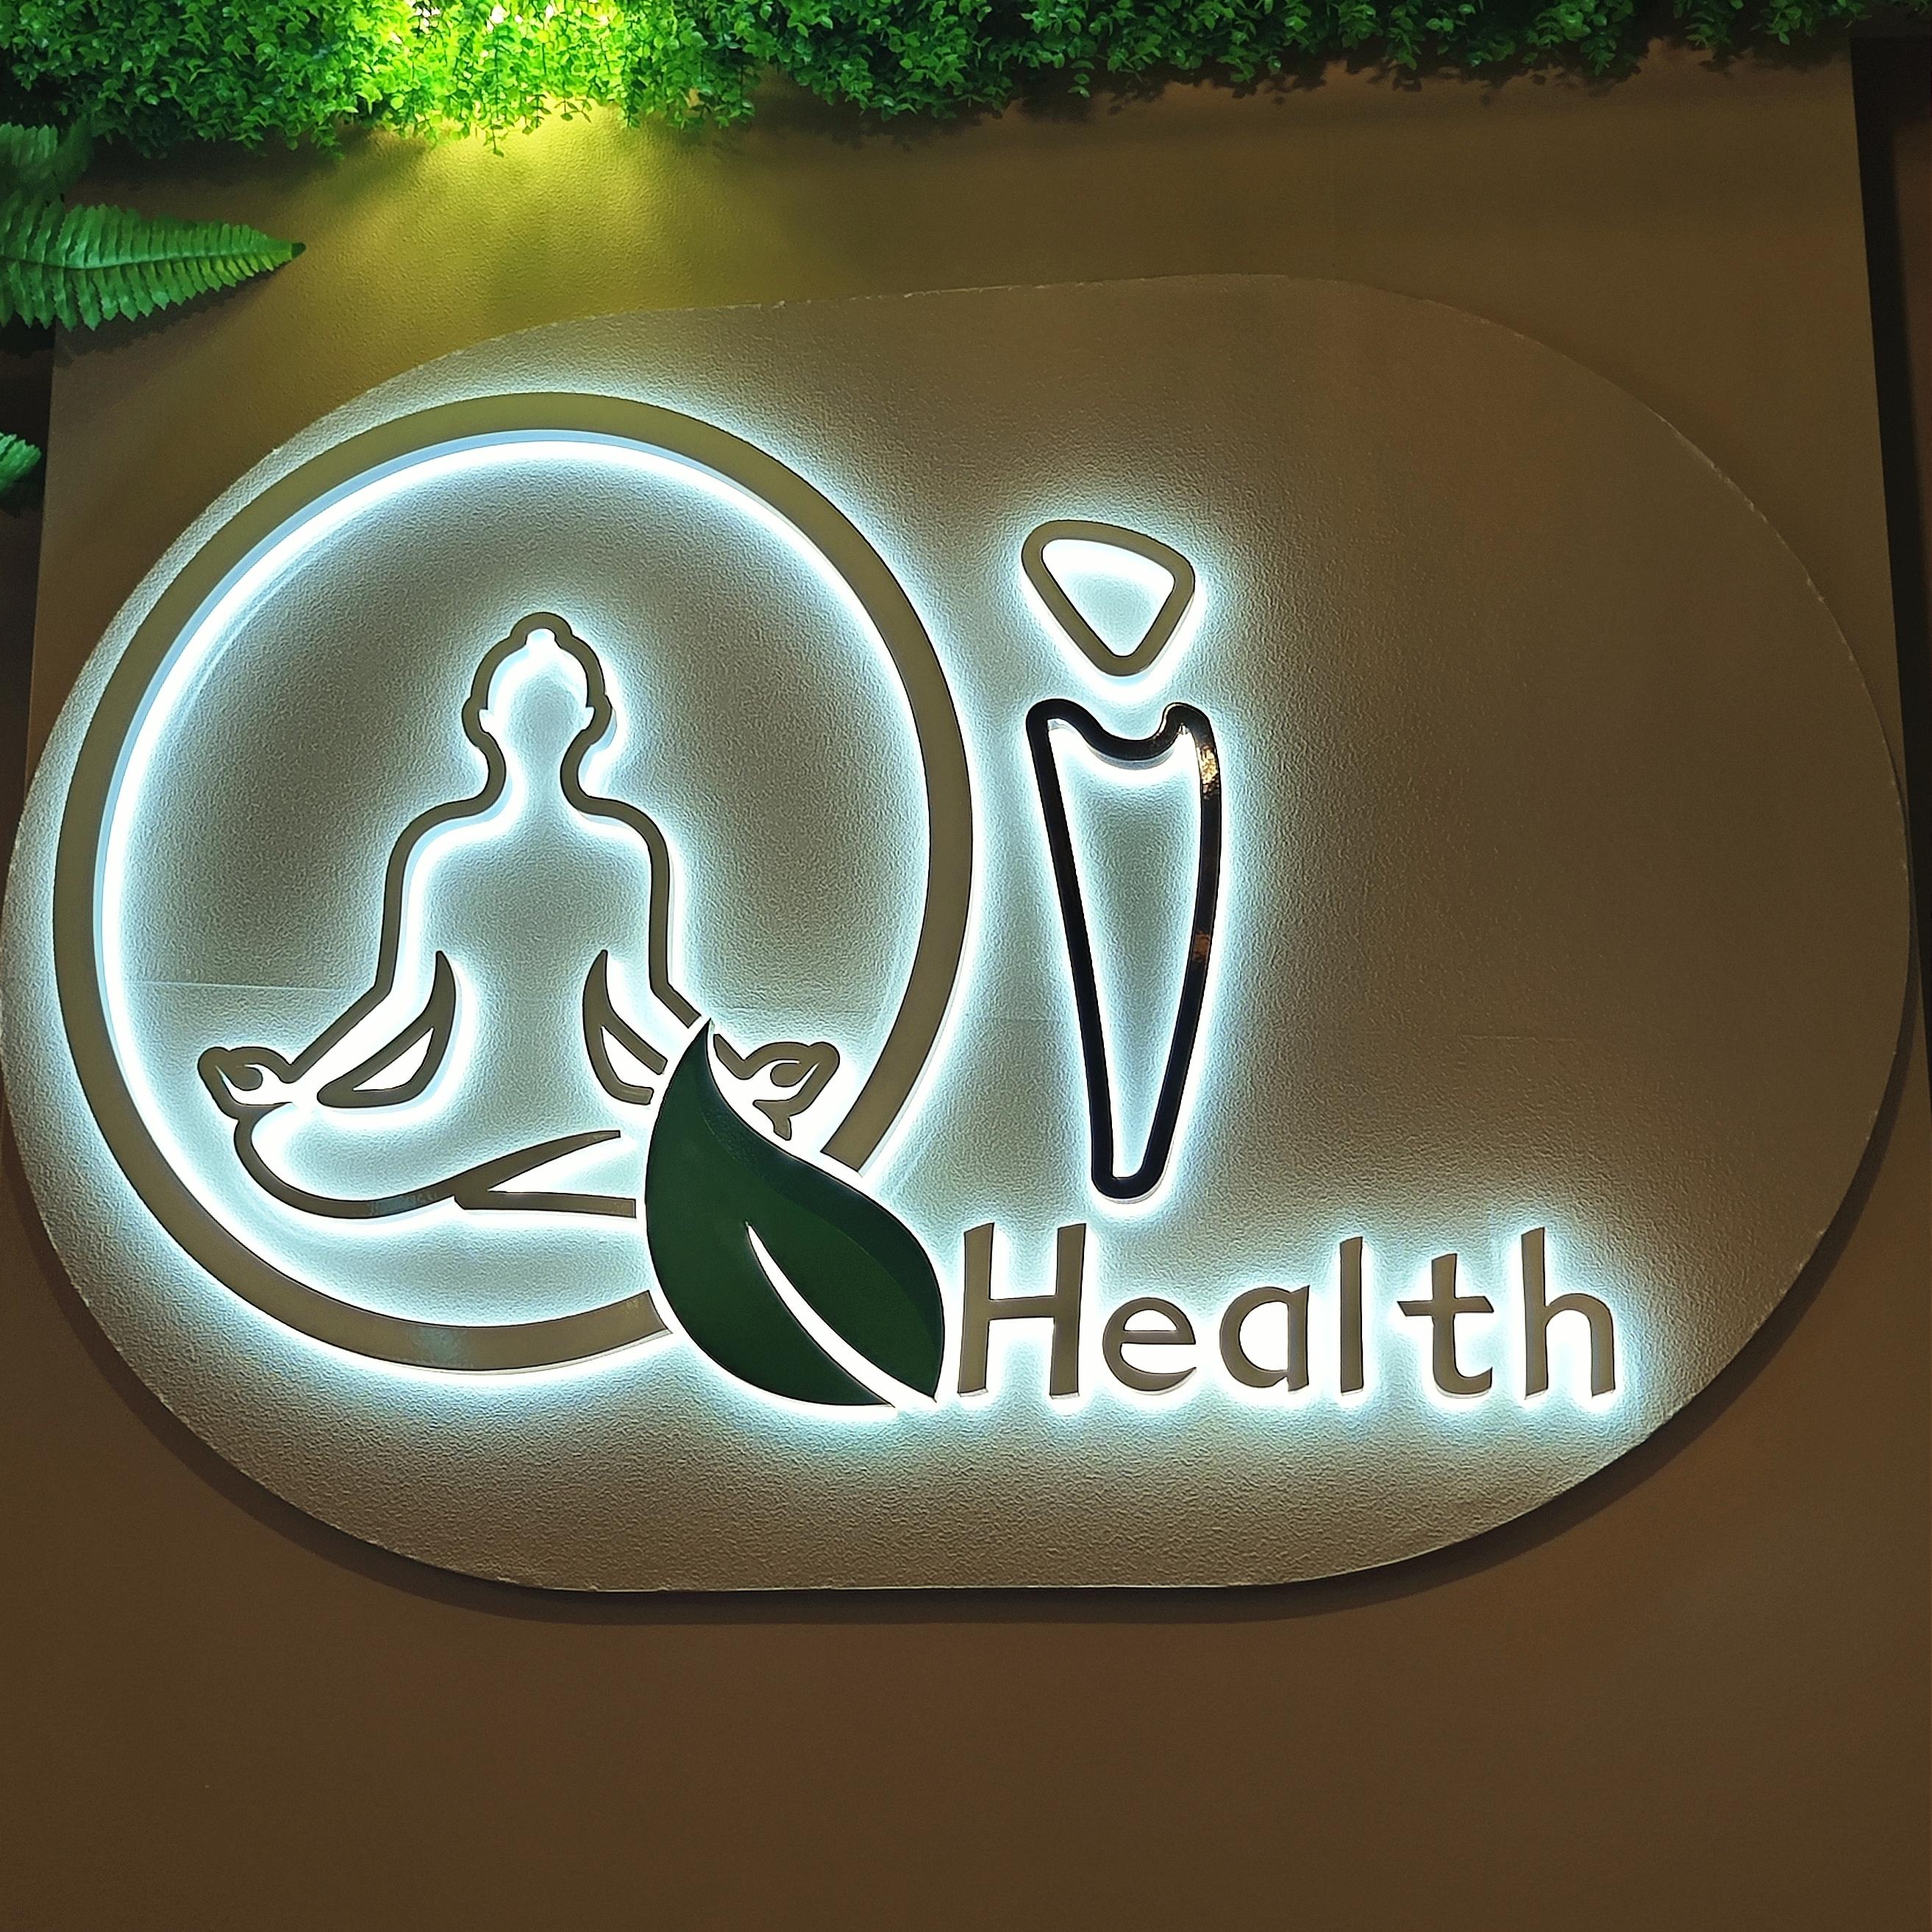 Qi Health's images